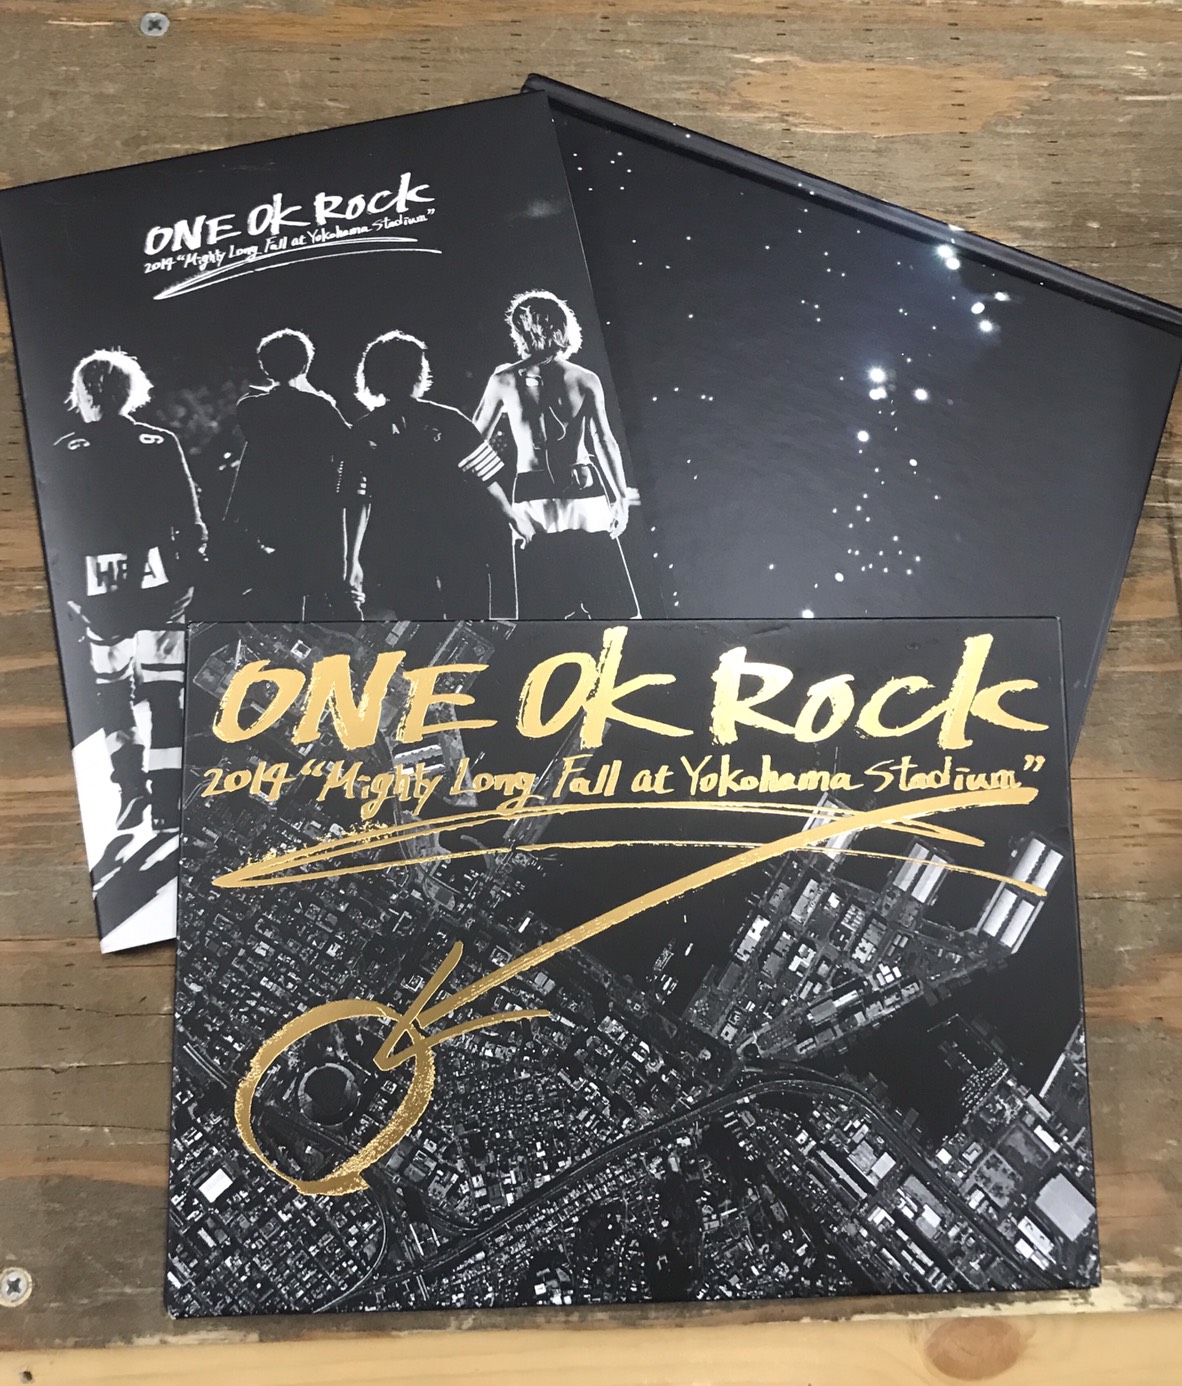 ONE OK ROCK 2014 Mighty Long Fall